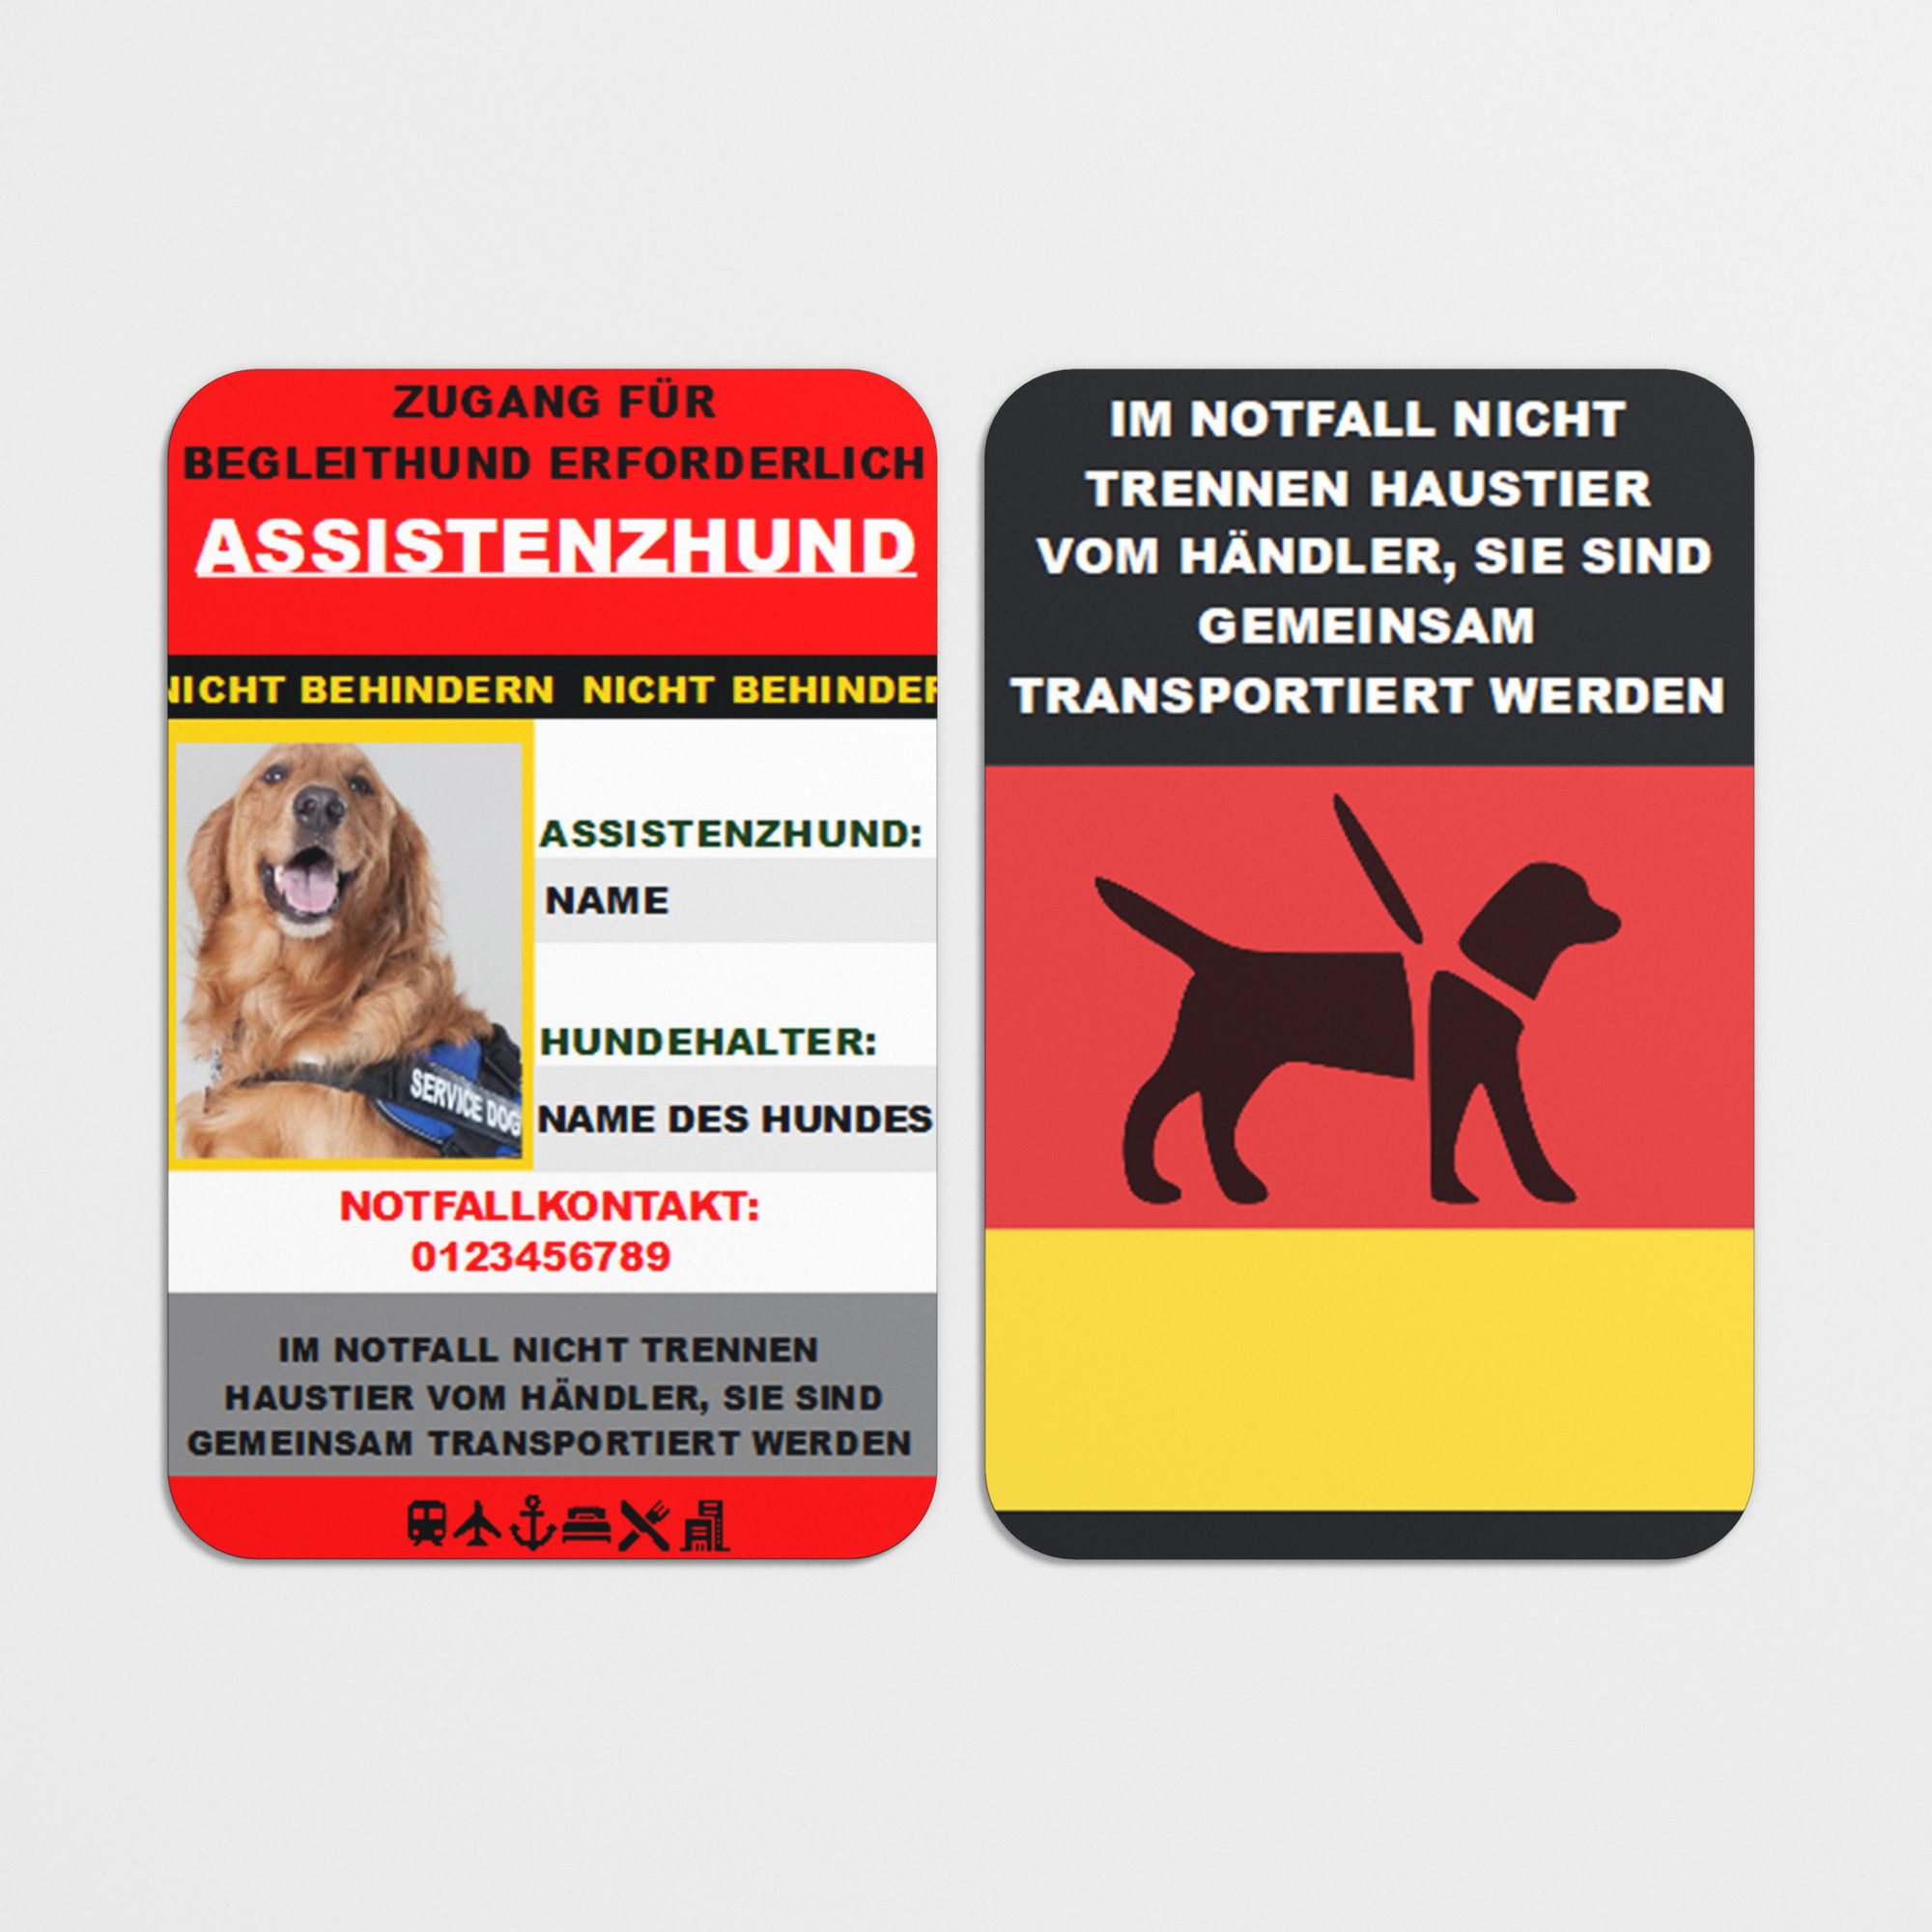 Assistance Dog Portrait Card in German